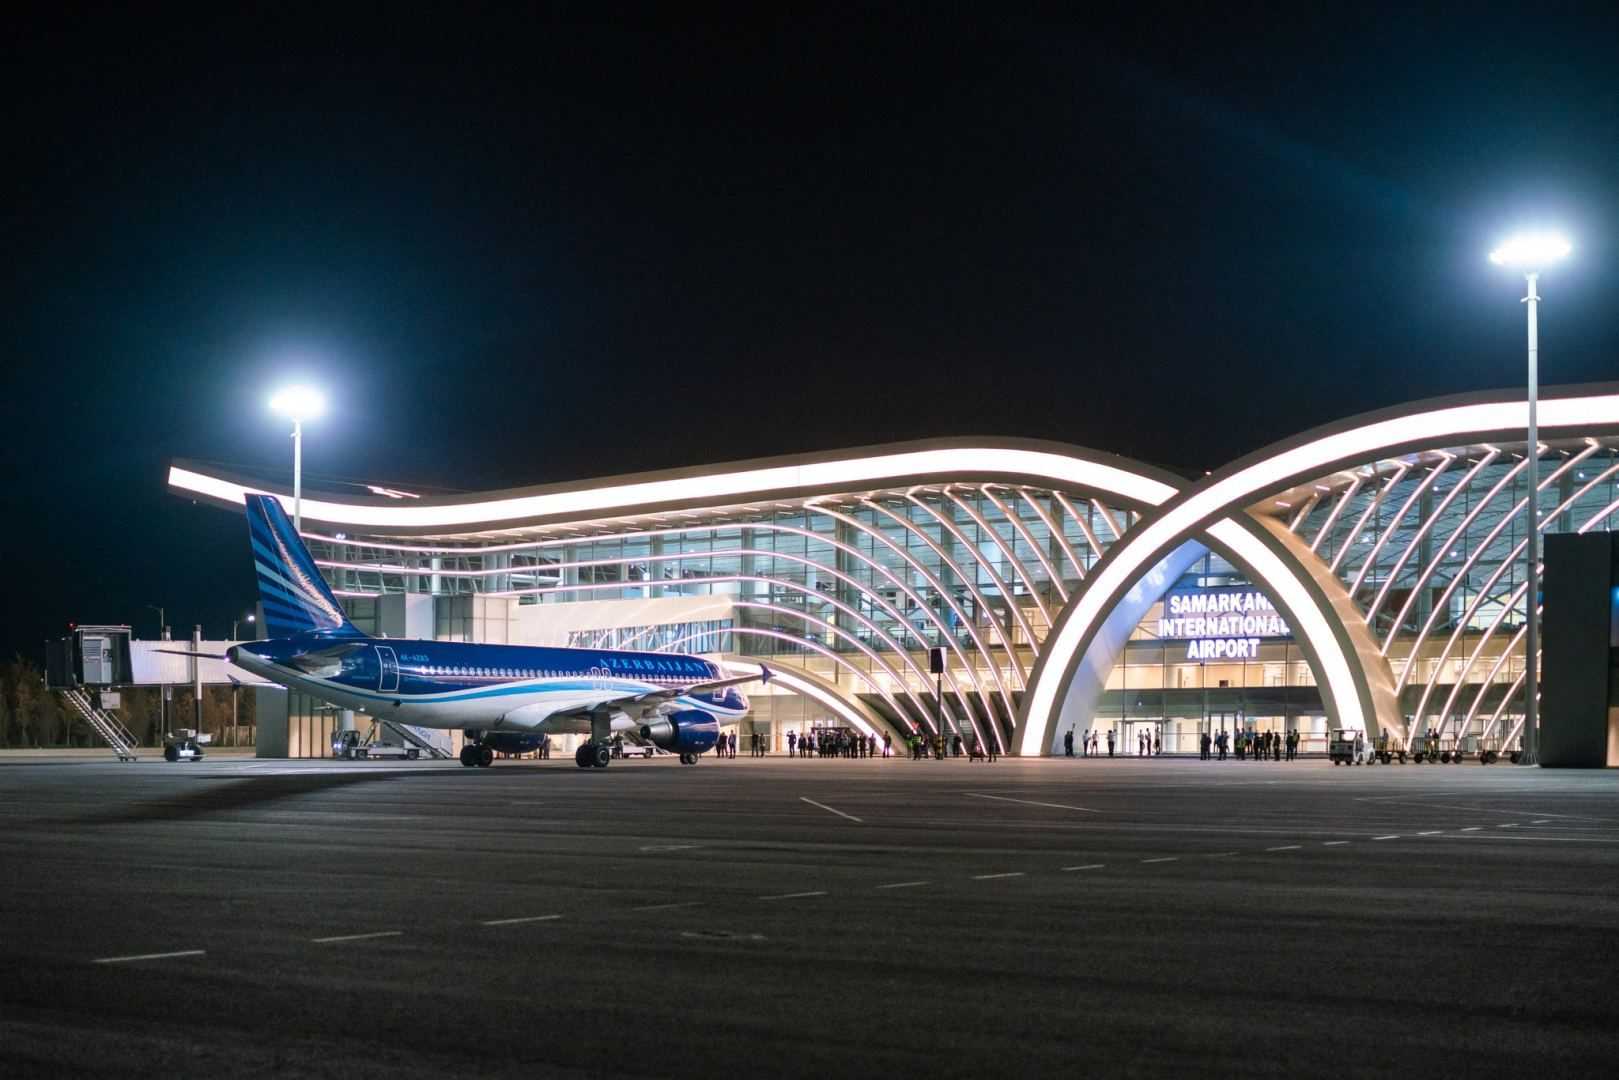 AZAL's first flight landed in Samarkand [PHOTO]